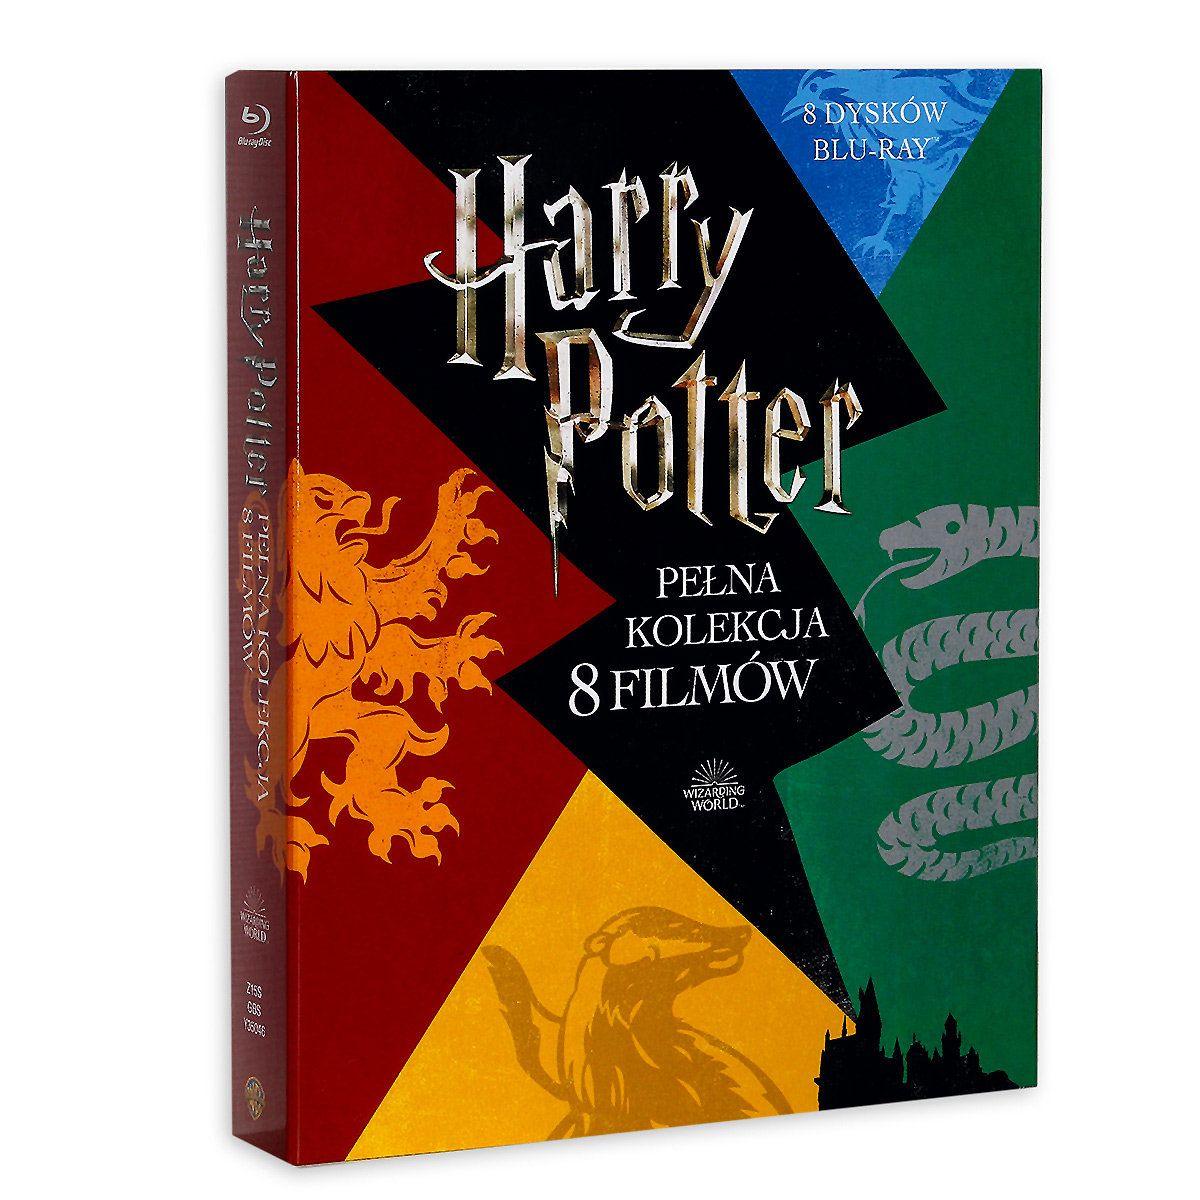 Гарри Поттер: Полная Коллекция (8 Blu-ray)